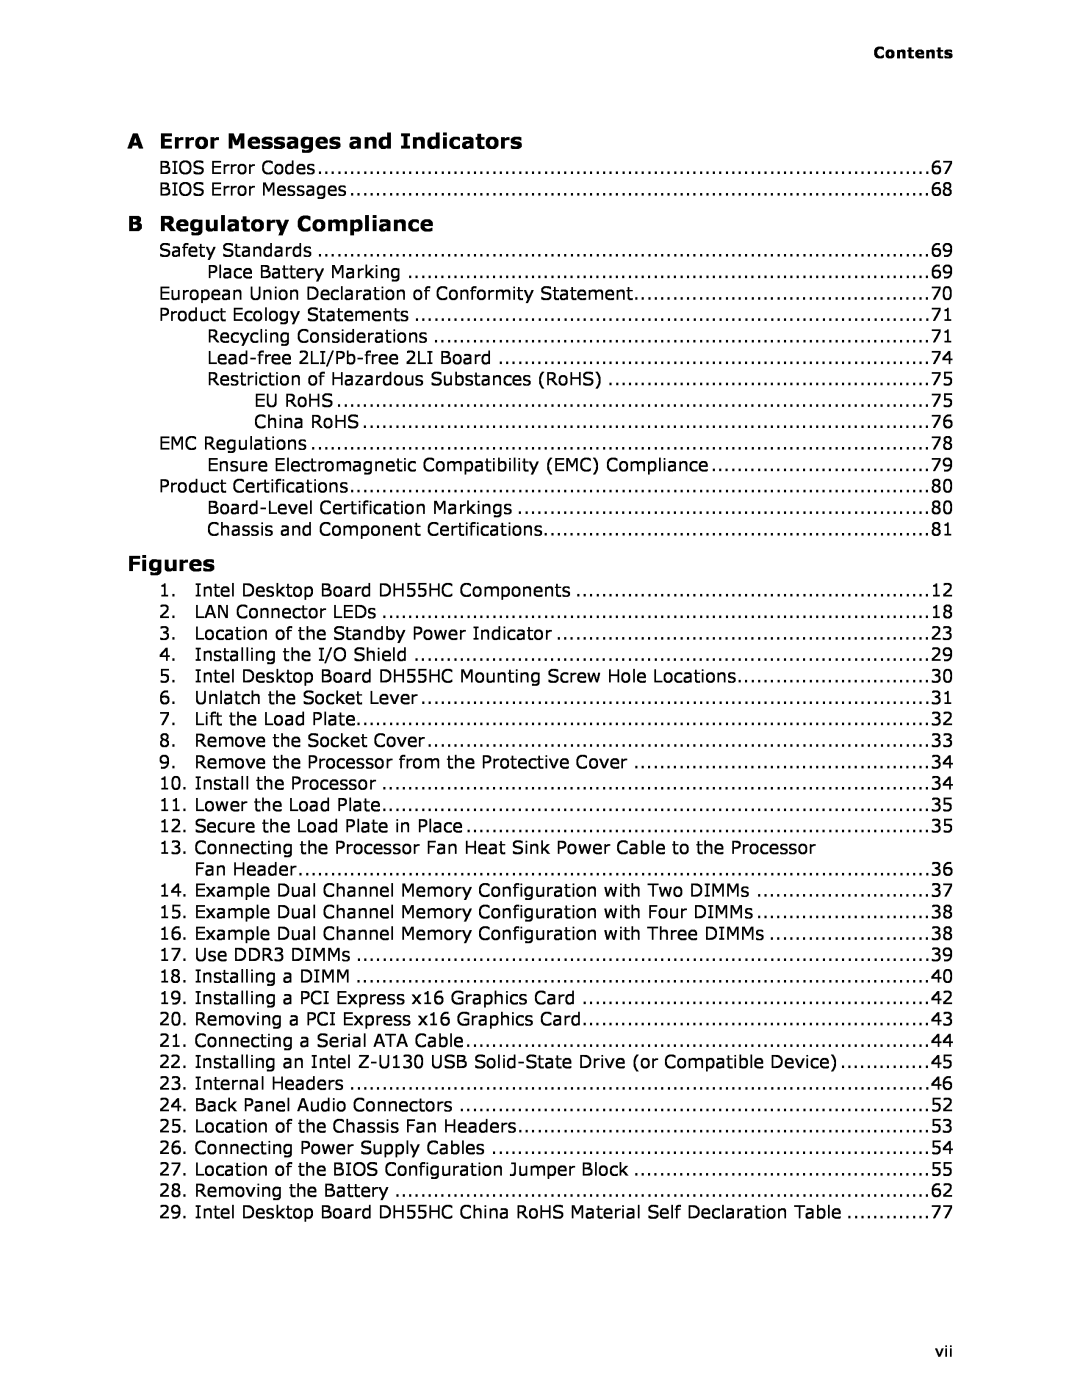 Intel BOXDH55HC manual Error Messages and Indicators, Regulatory Compliance, Figures 